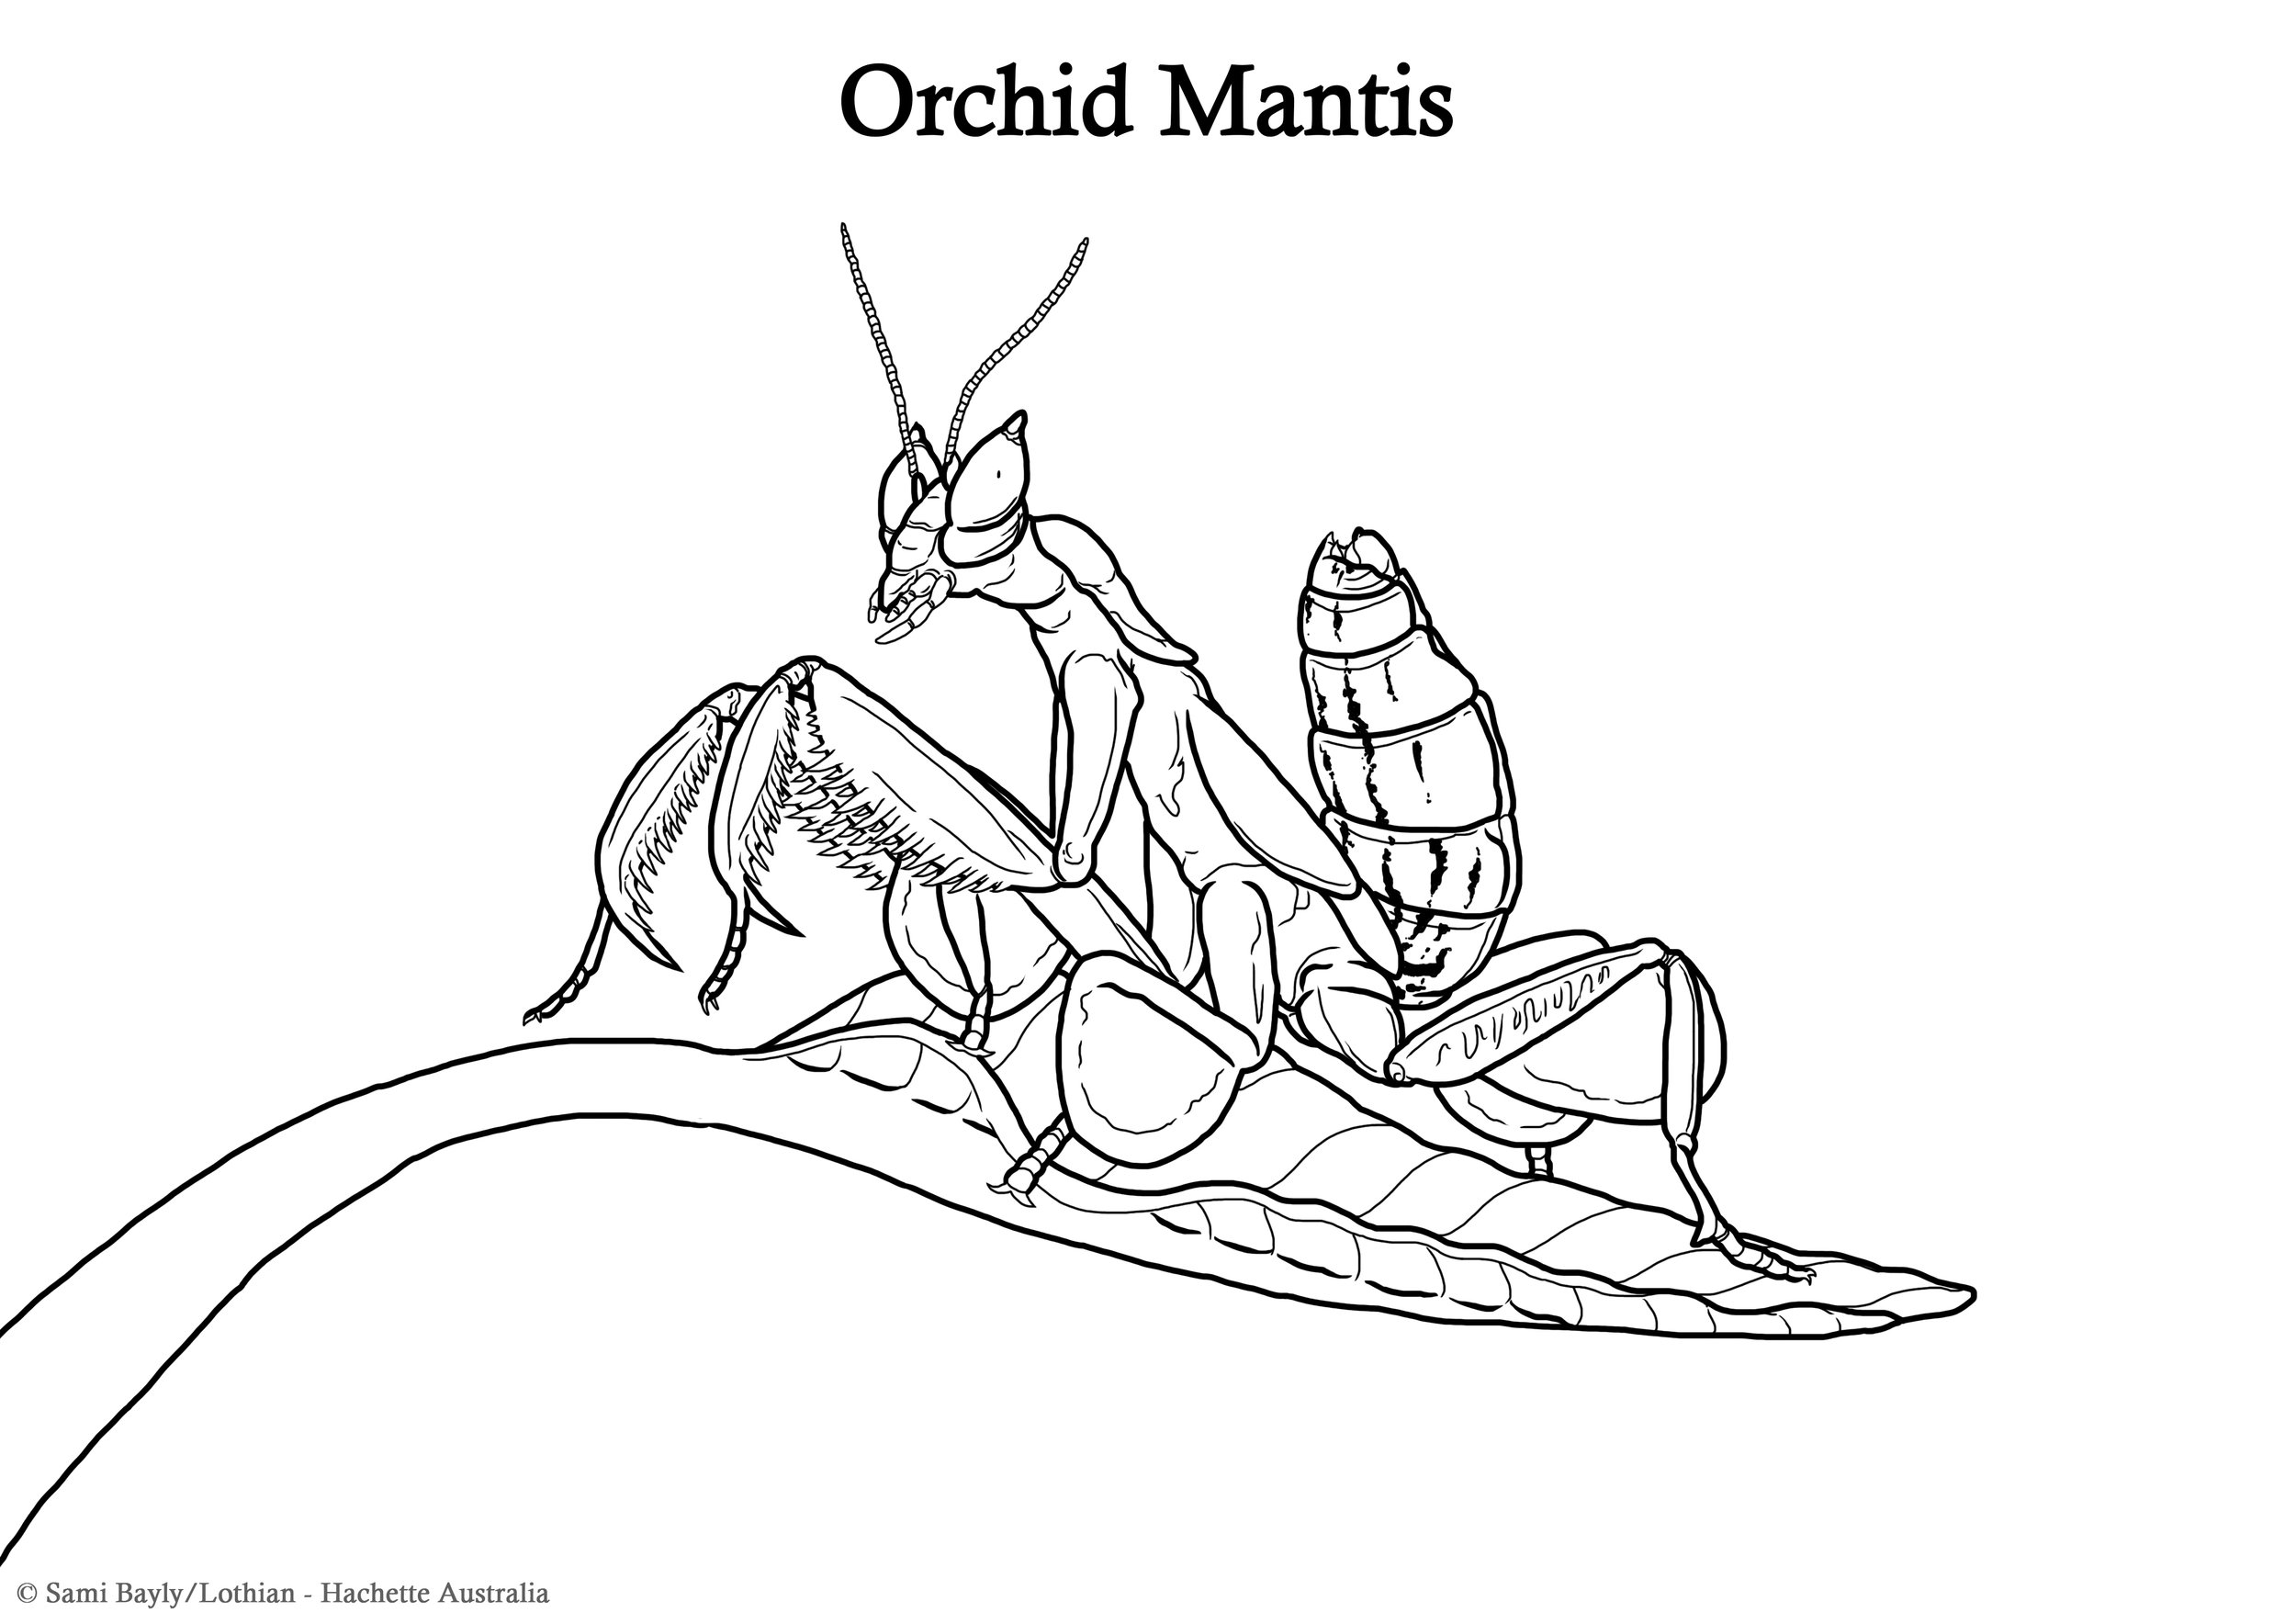 Orchid Mantis Line Drawing.jpg